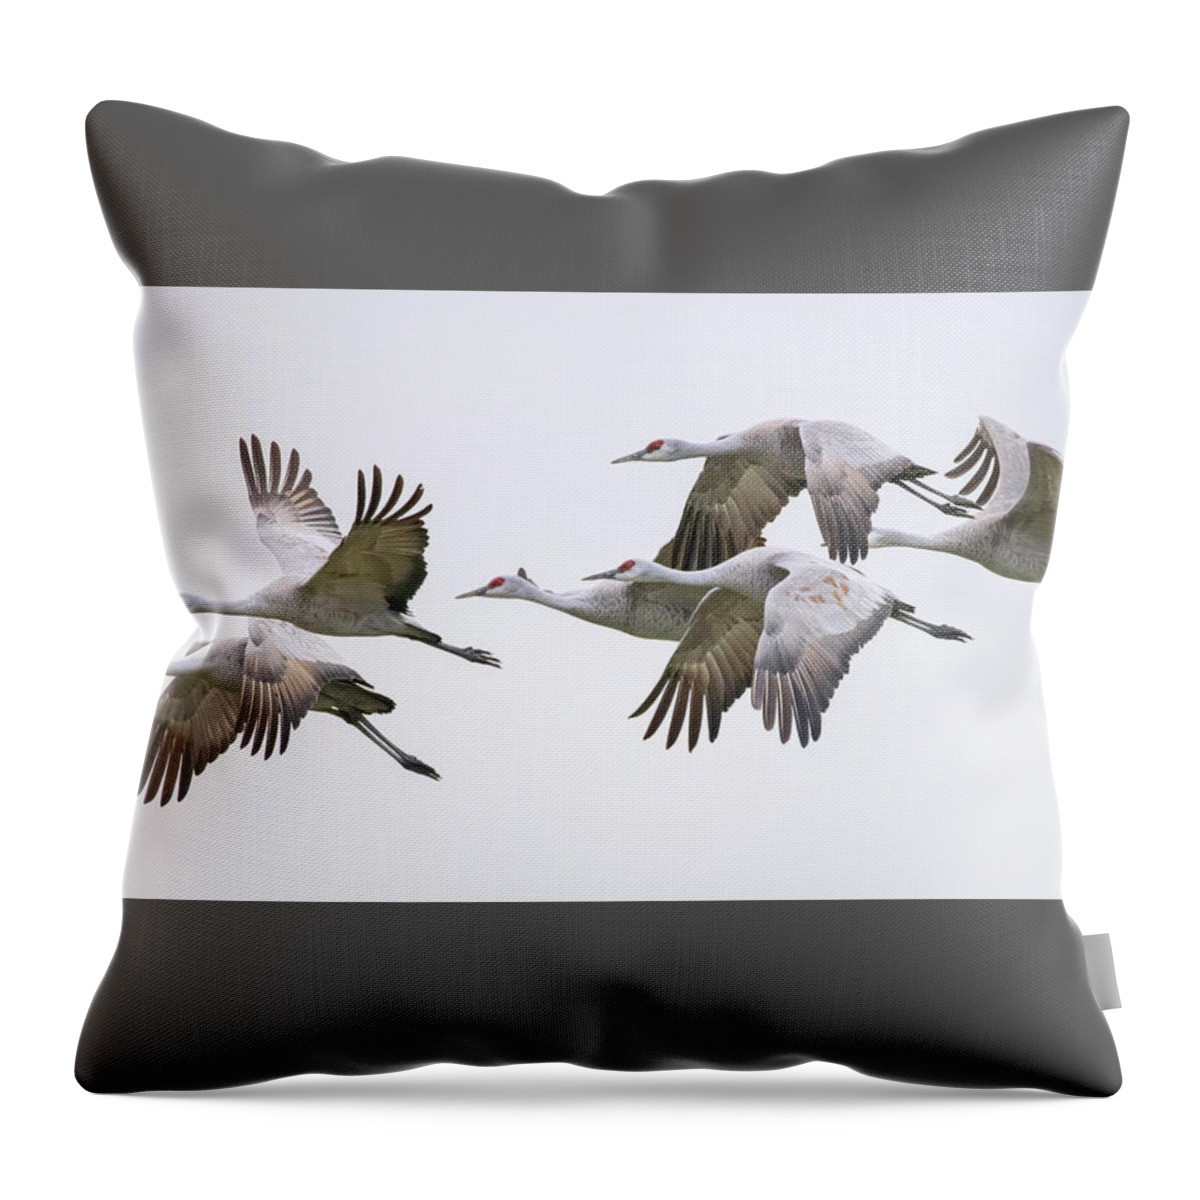 Sandhill Crane Throw Pillow featuring the photograph Flying Sandhill Cranes #1 by Carla Brennan